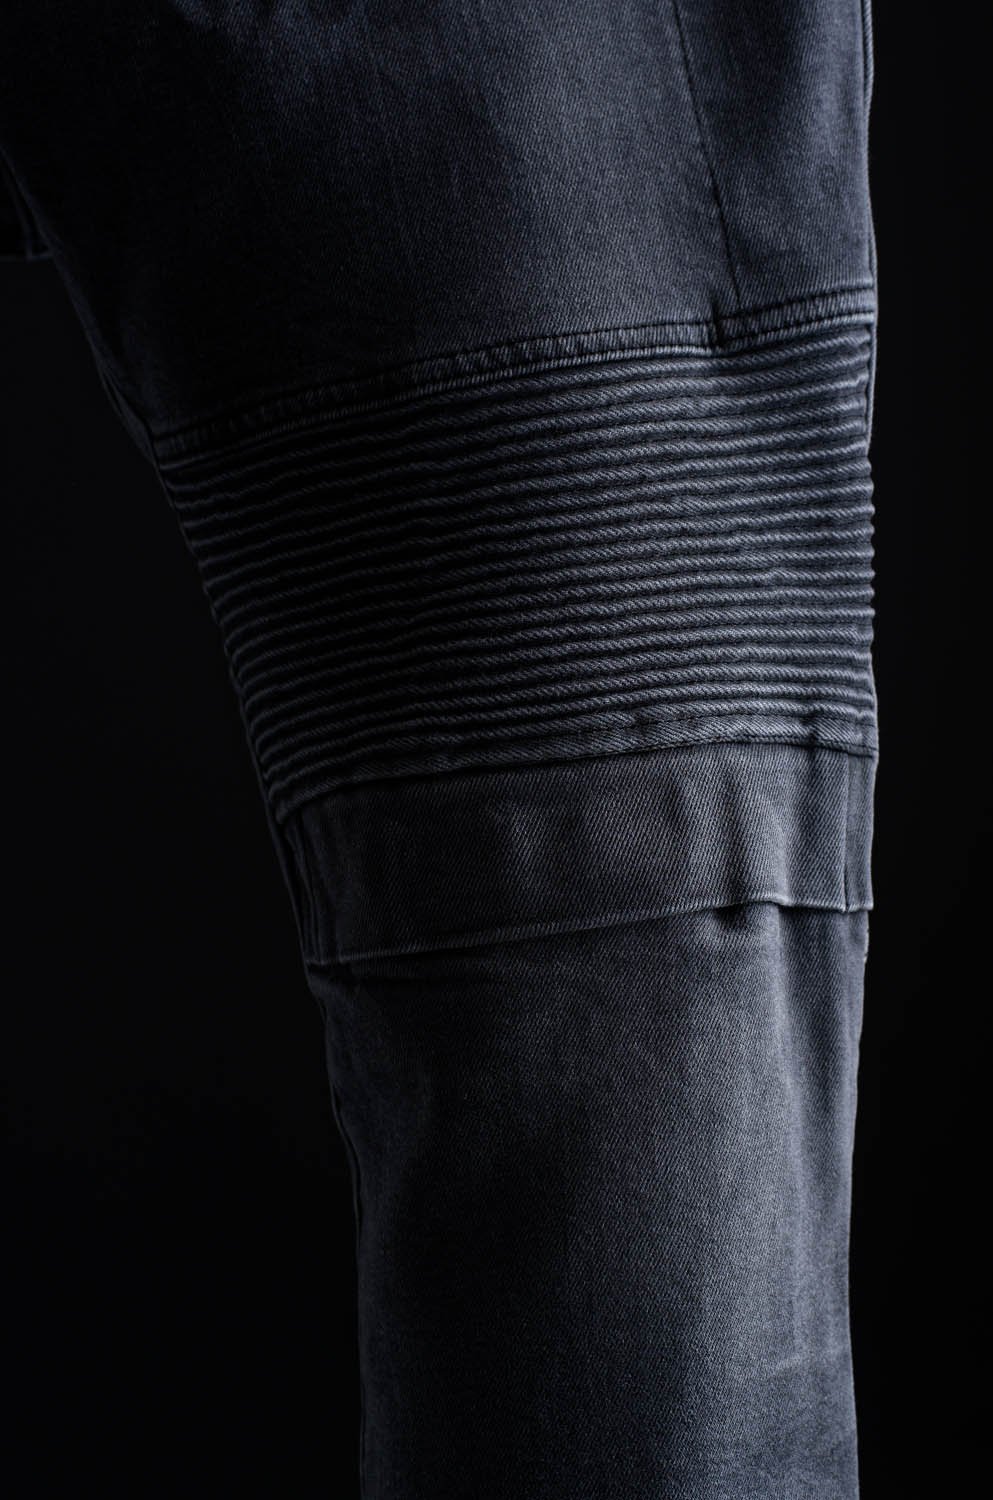 Karl Devil 9 – Men's Slim-Fit Motorcycle Jeans knees area close-up view 2